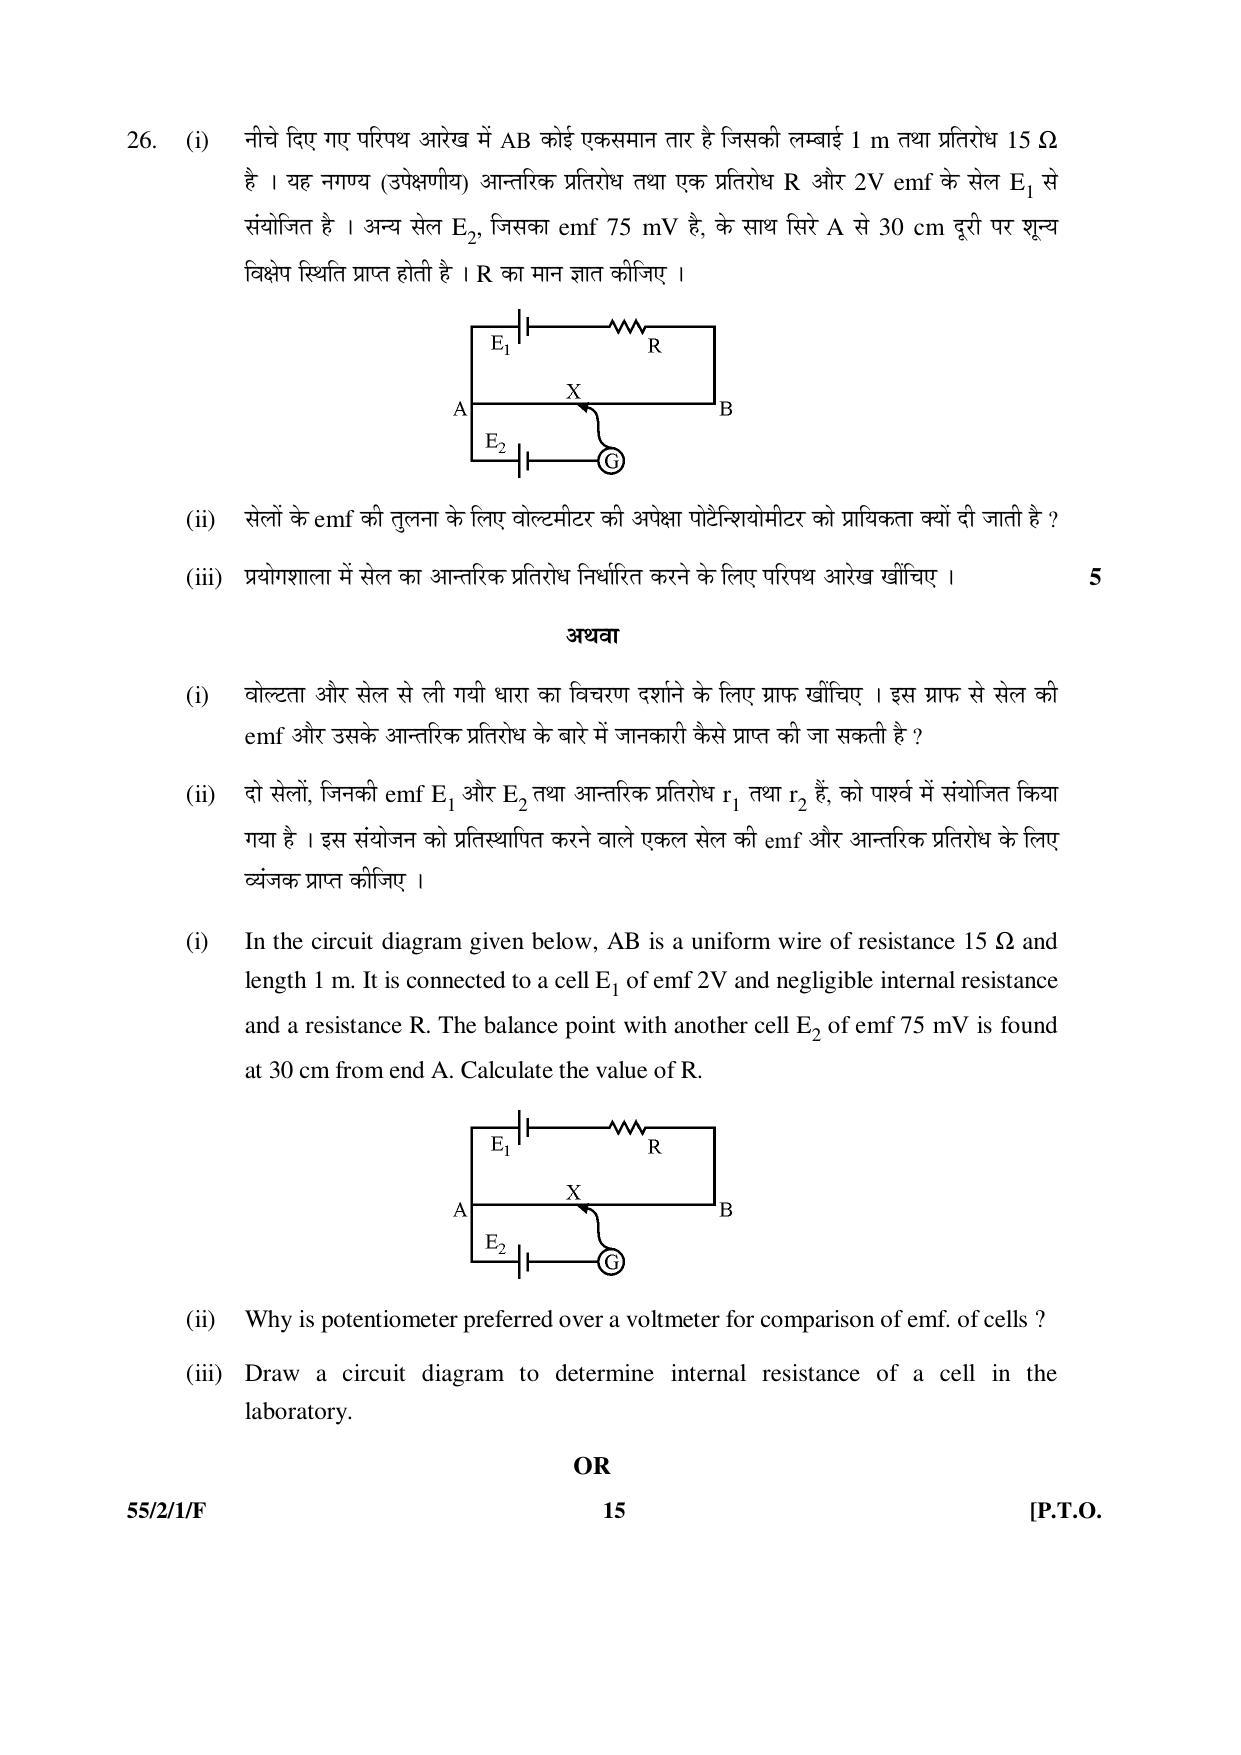 CBSE Class 12 55-2-1-F _Physics_SET-1 2016 Question Paper - Page 15